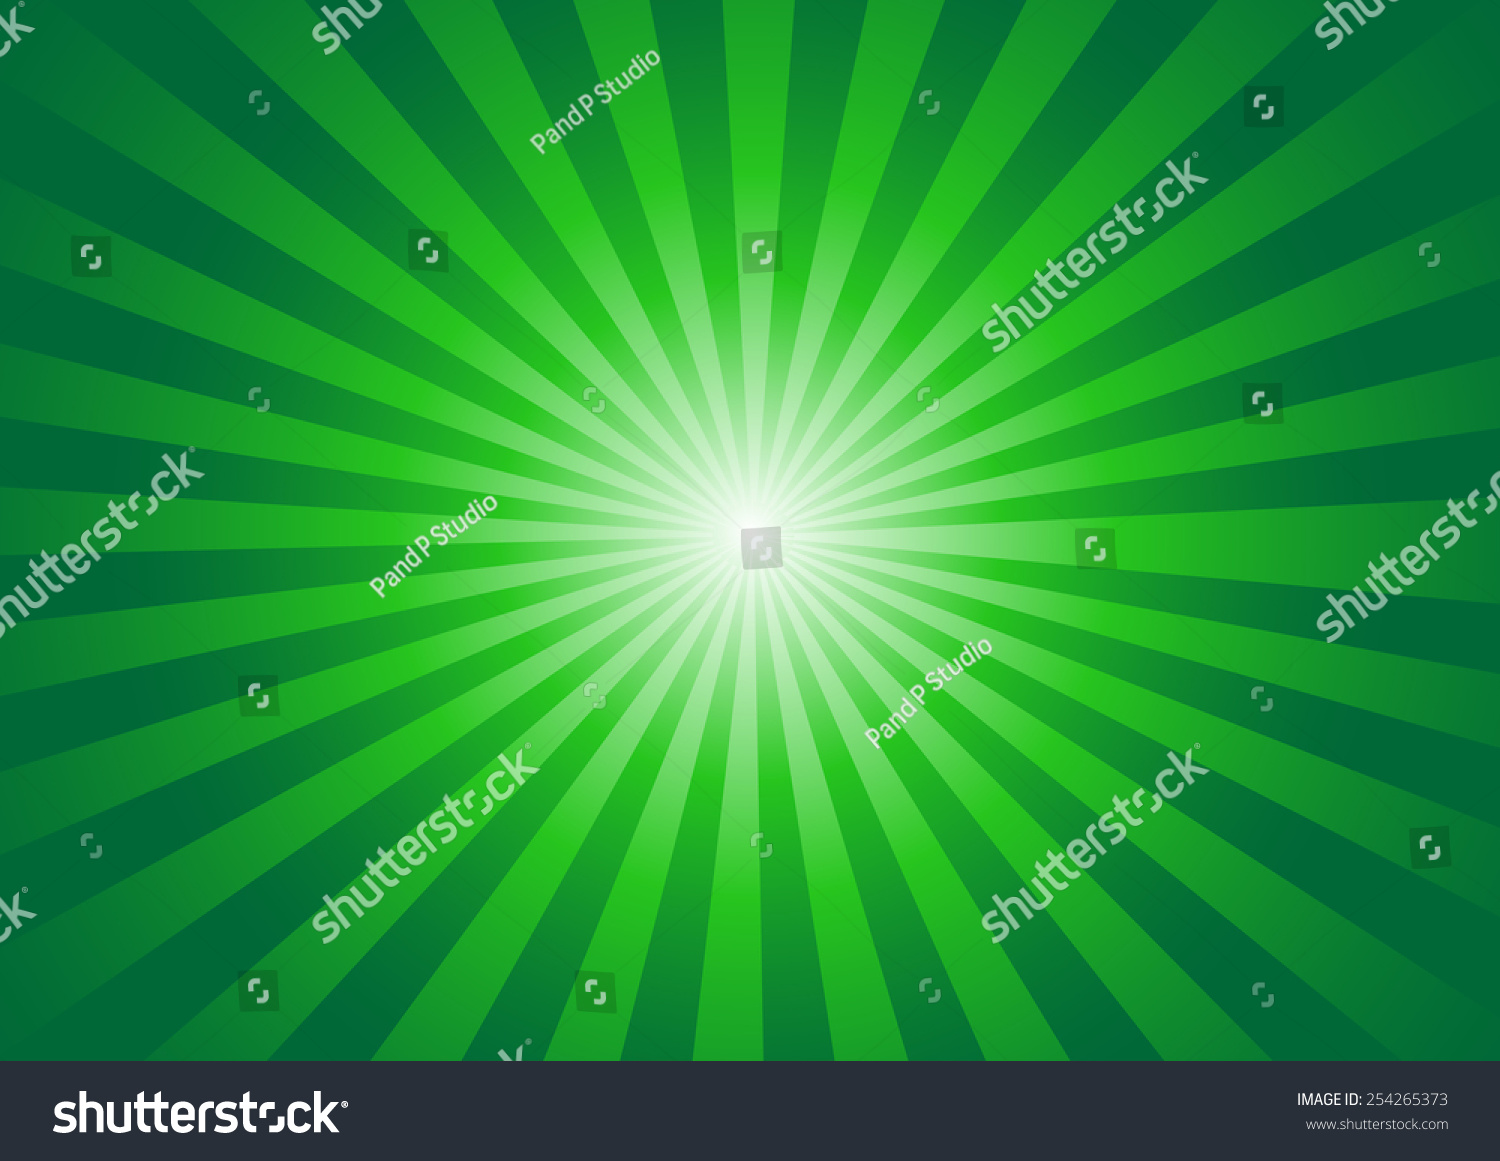 Green sunburst background Stock Vectors, Images & Vector Art | Shutterstock